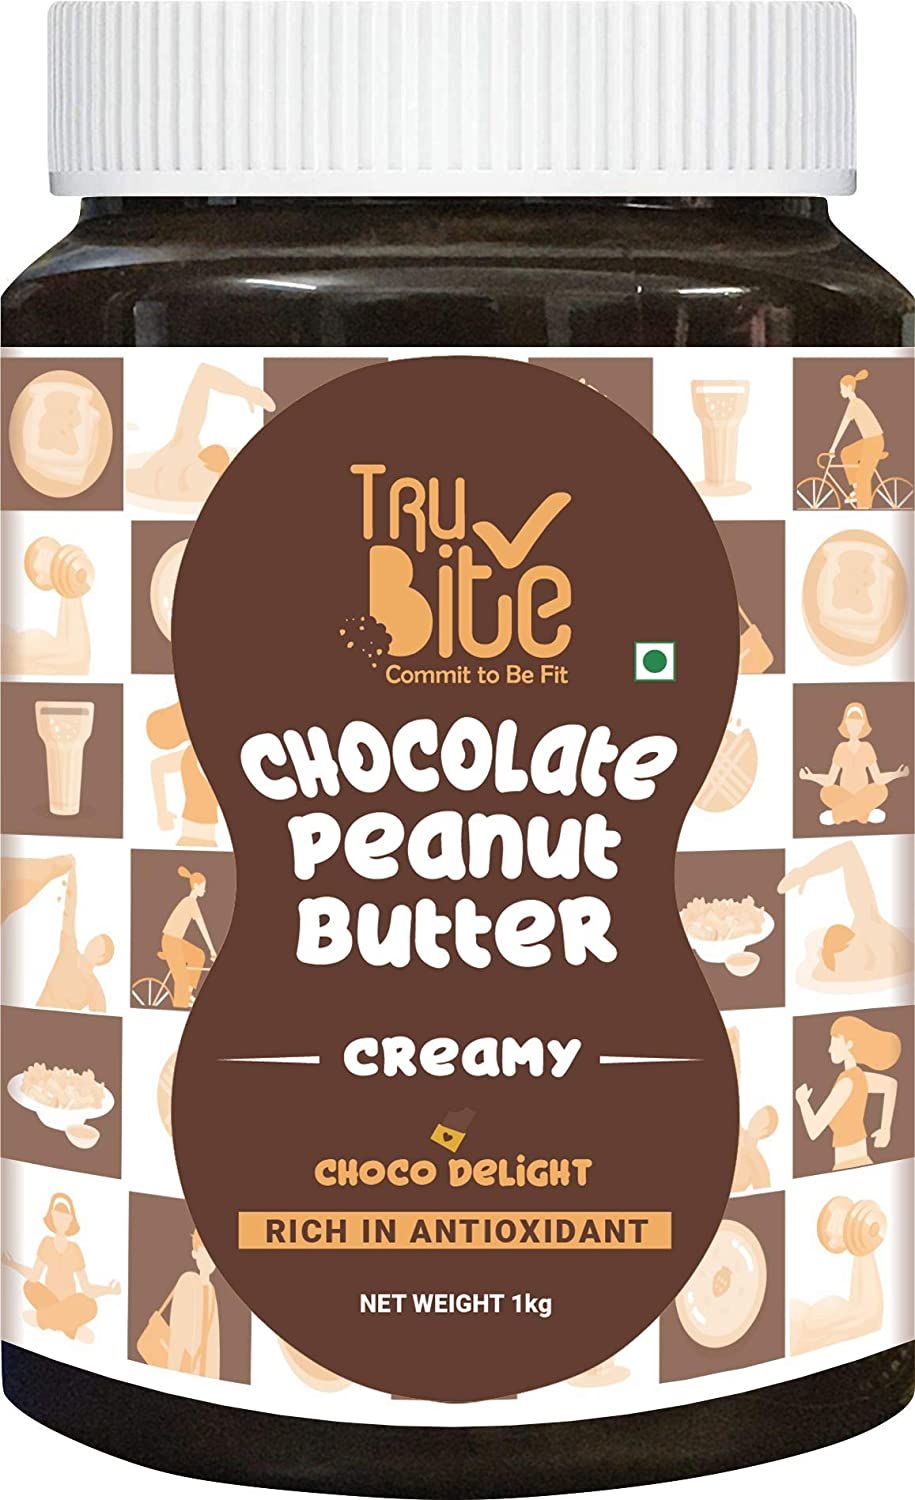 Trubite Chocolate Peanut Butter Creamy Image